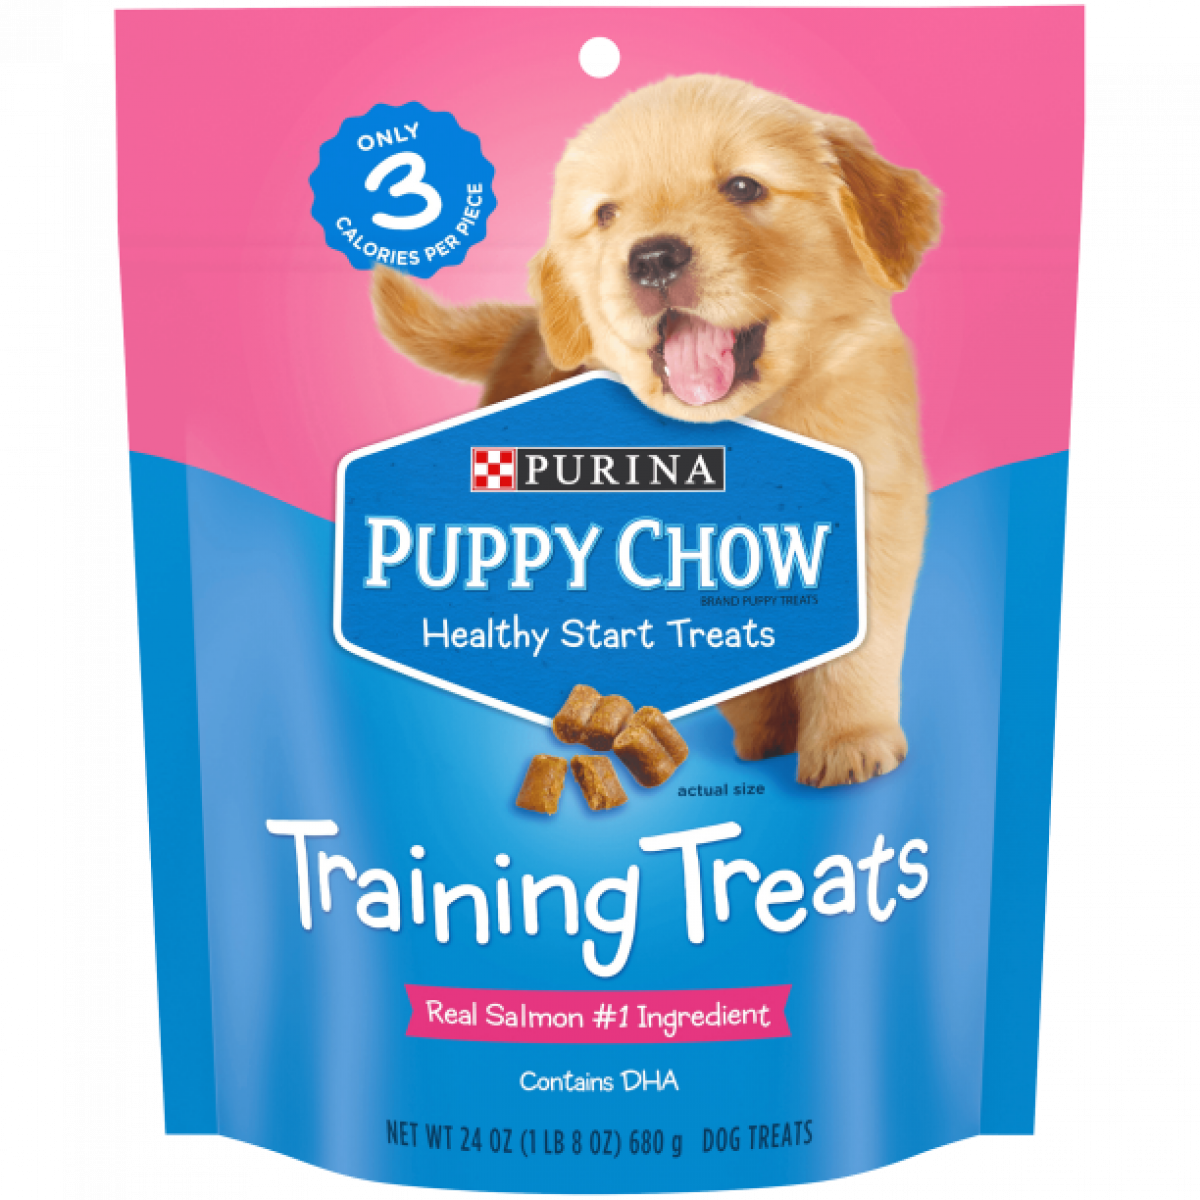 A pack of Purina dog treats.